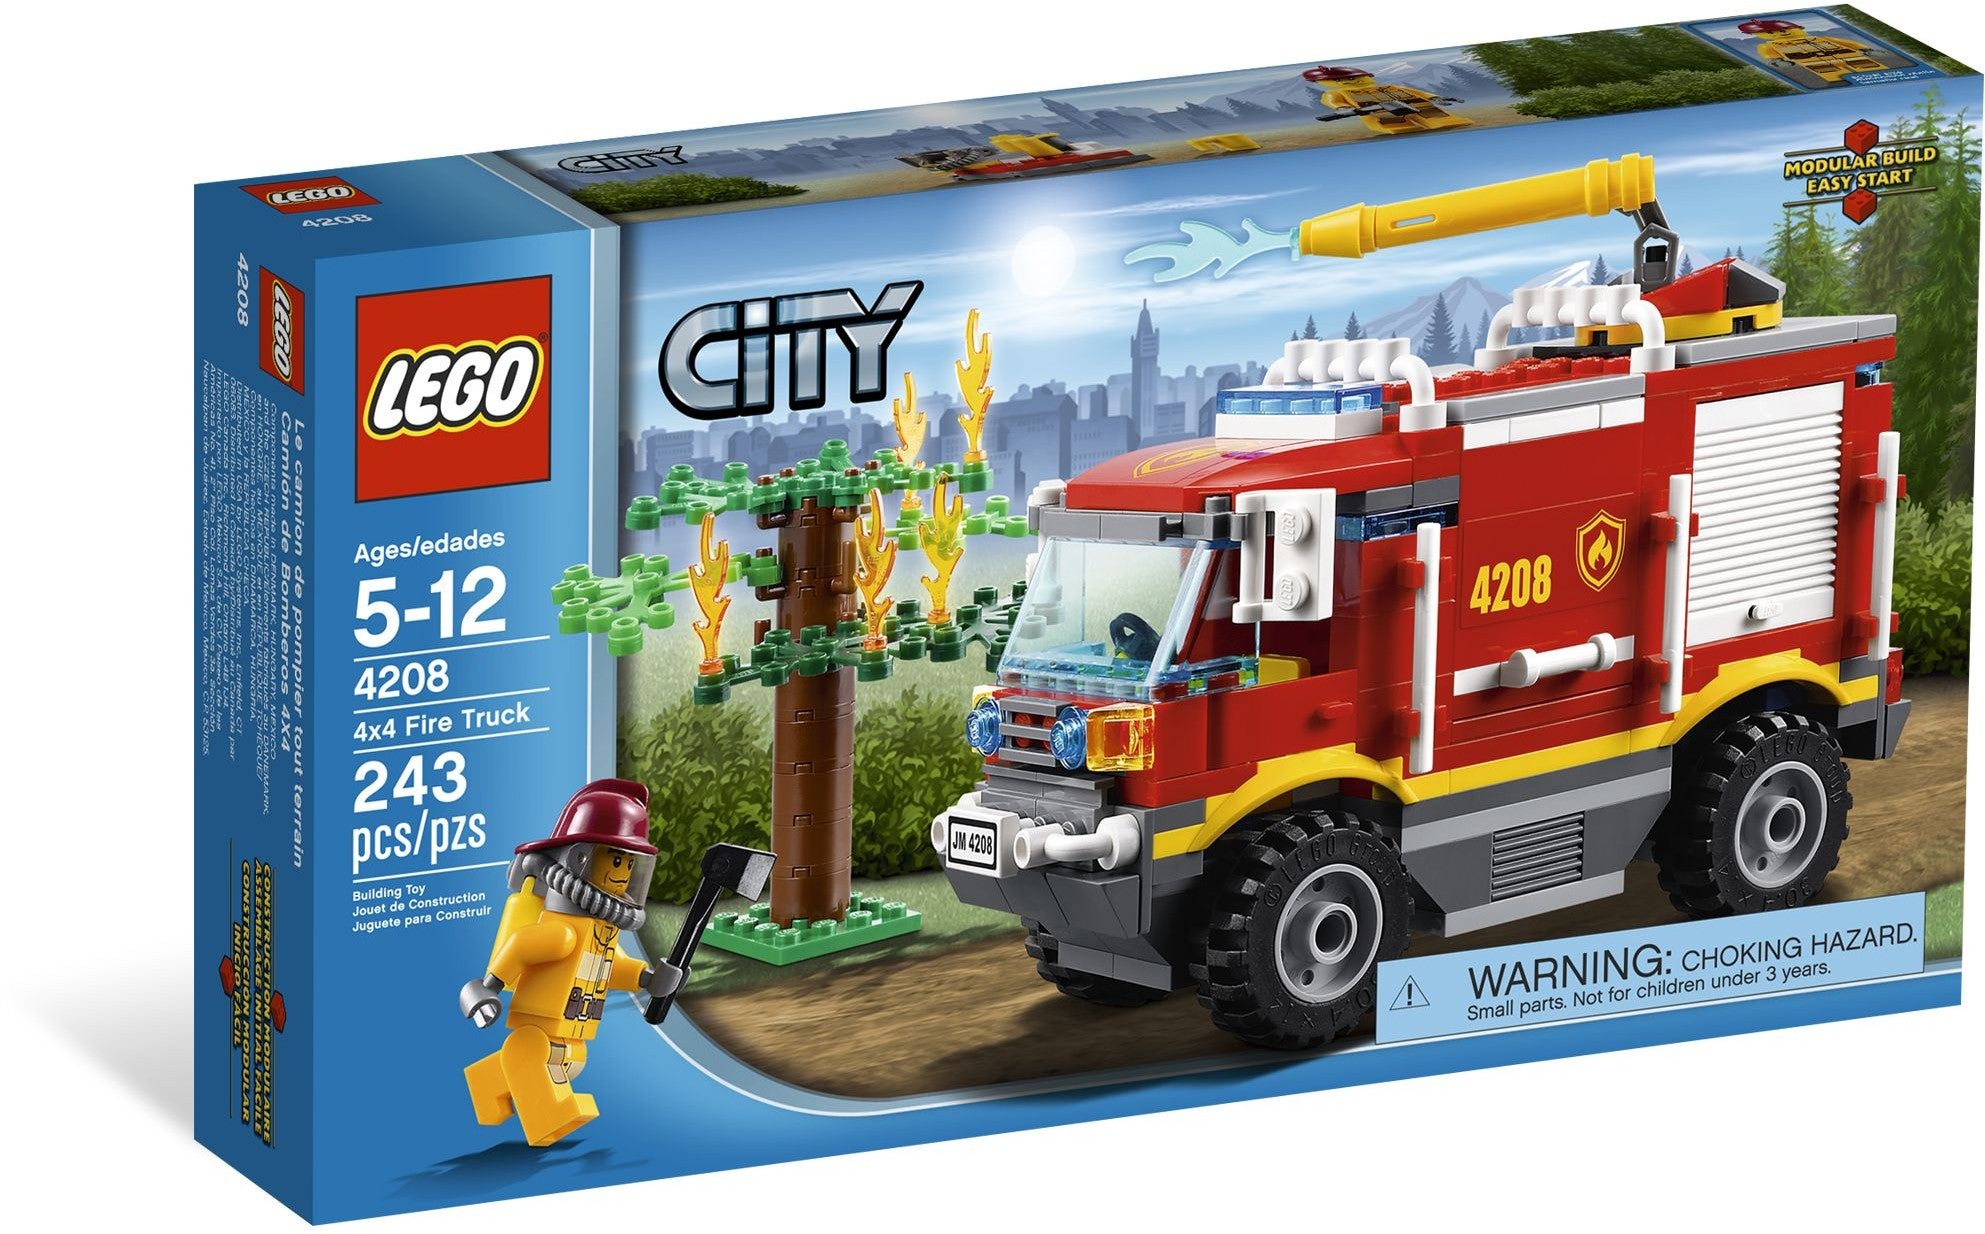 Lego City 4208 - Fire Truck